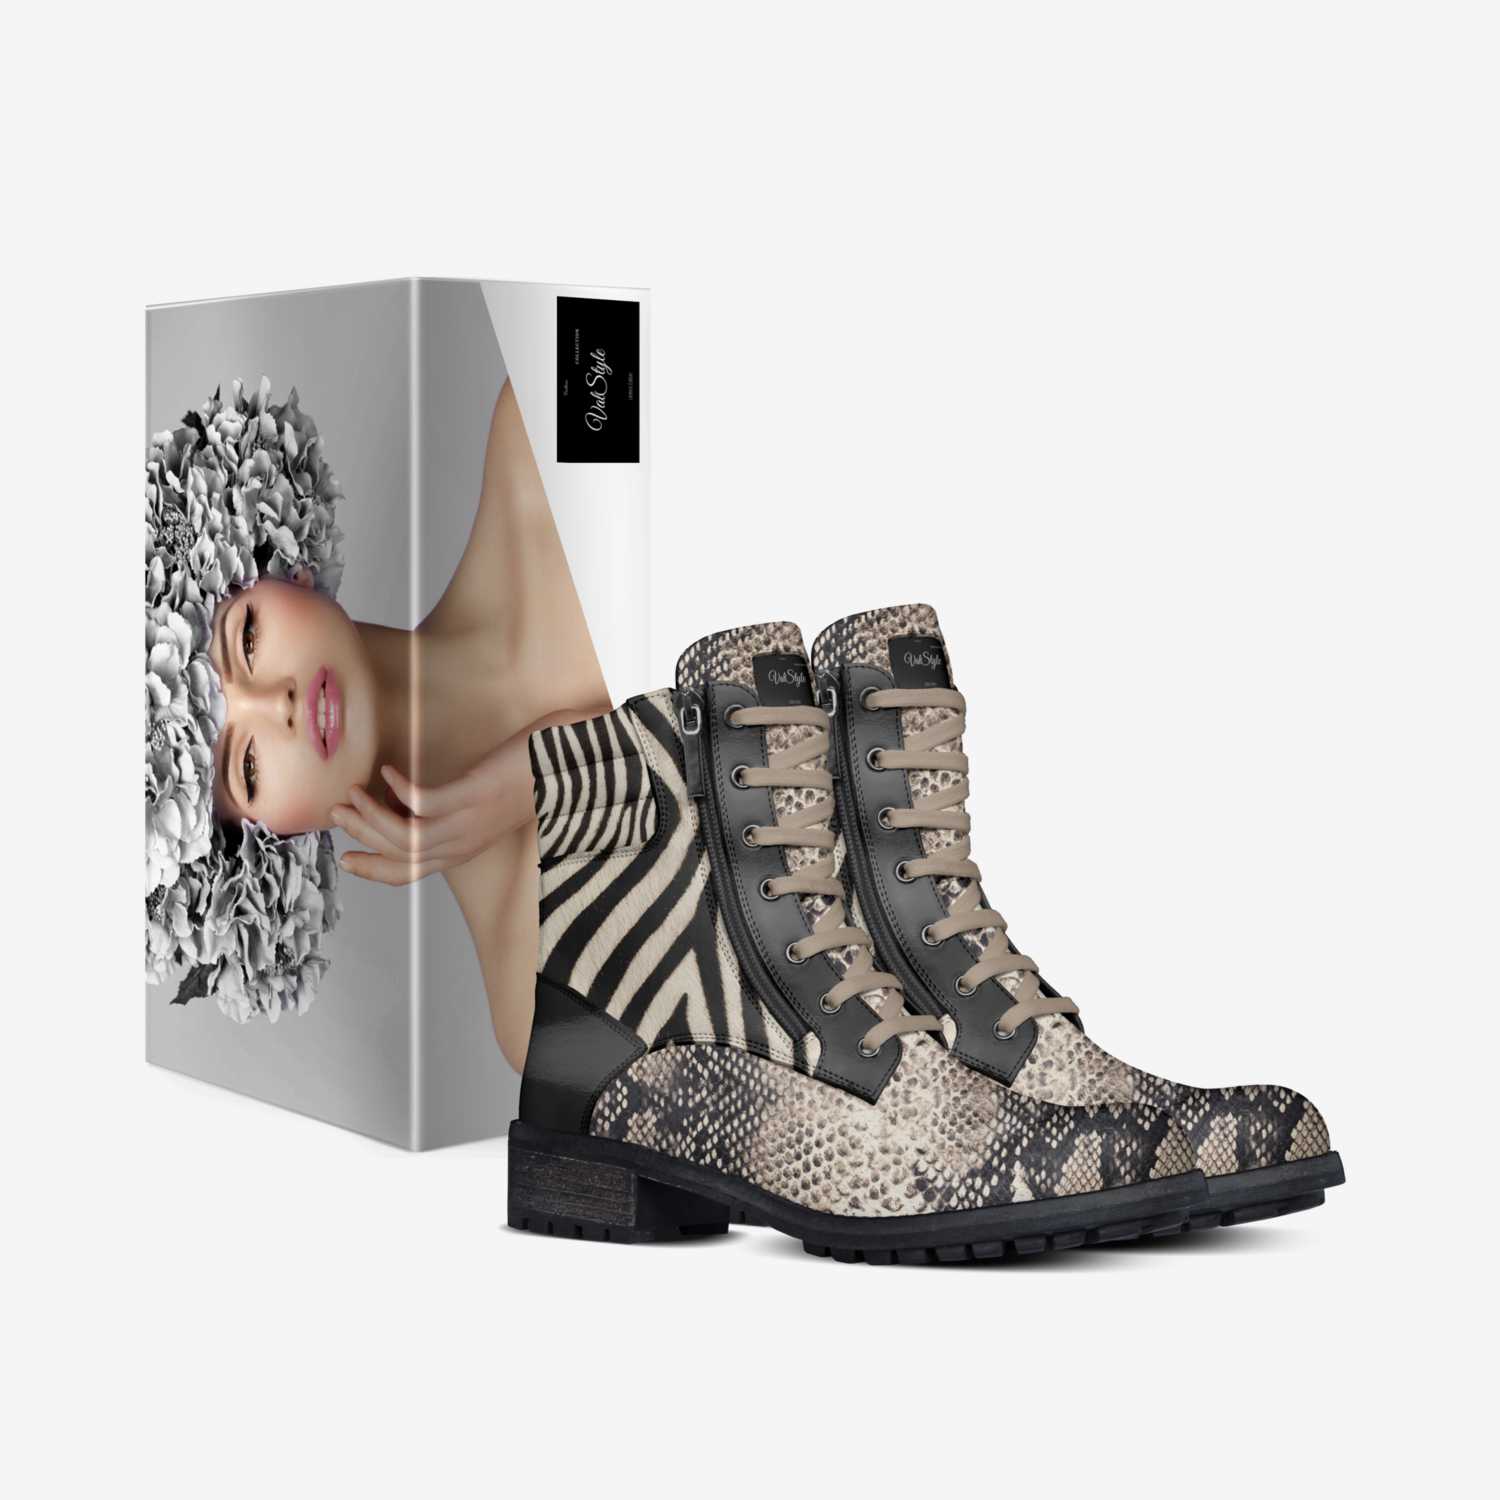 VS custom made in Italy shoes by Valentina Bozhilova | Box view